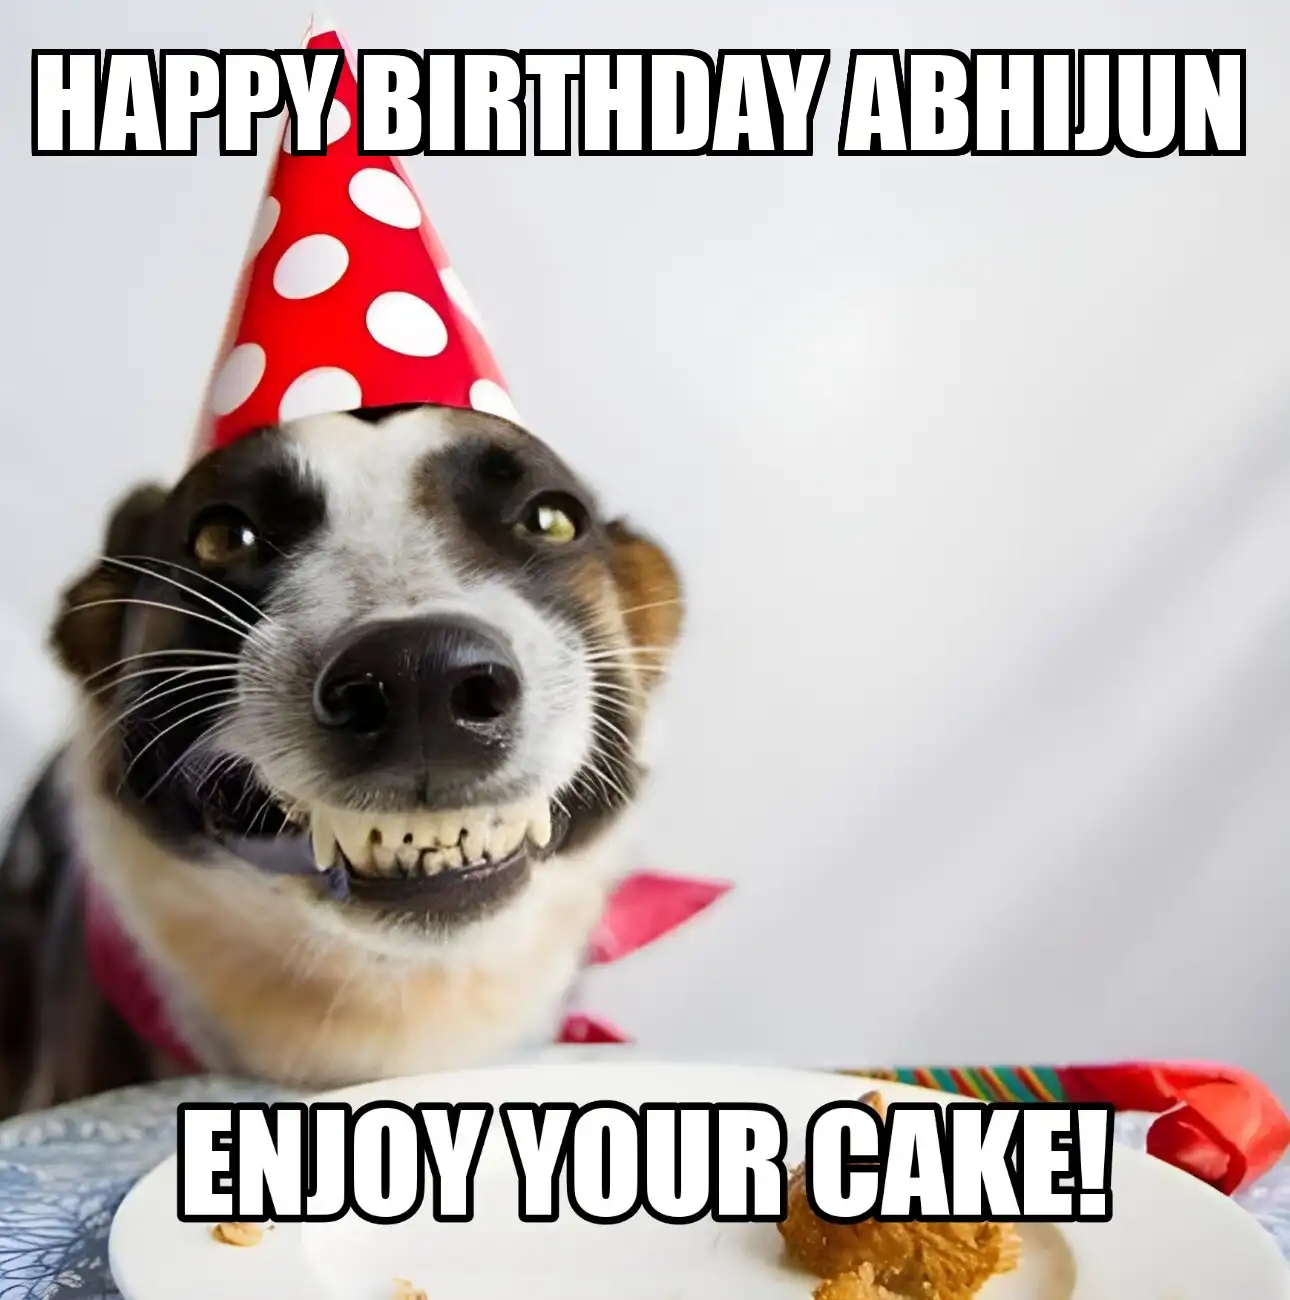 Happy Birthday Abhijun Enjoy Your Cake Dog Meme